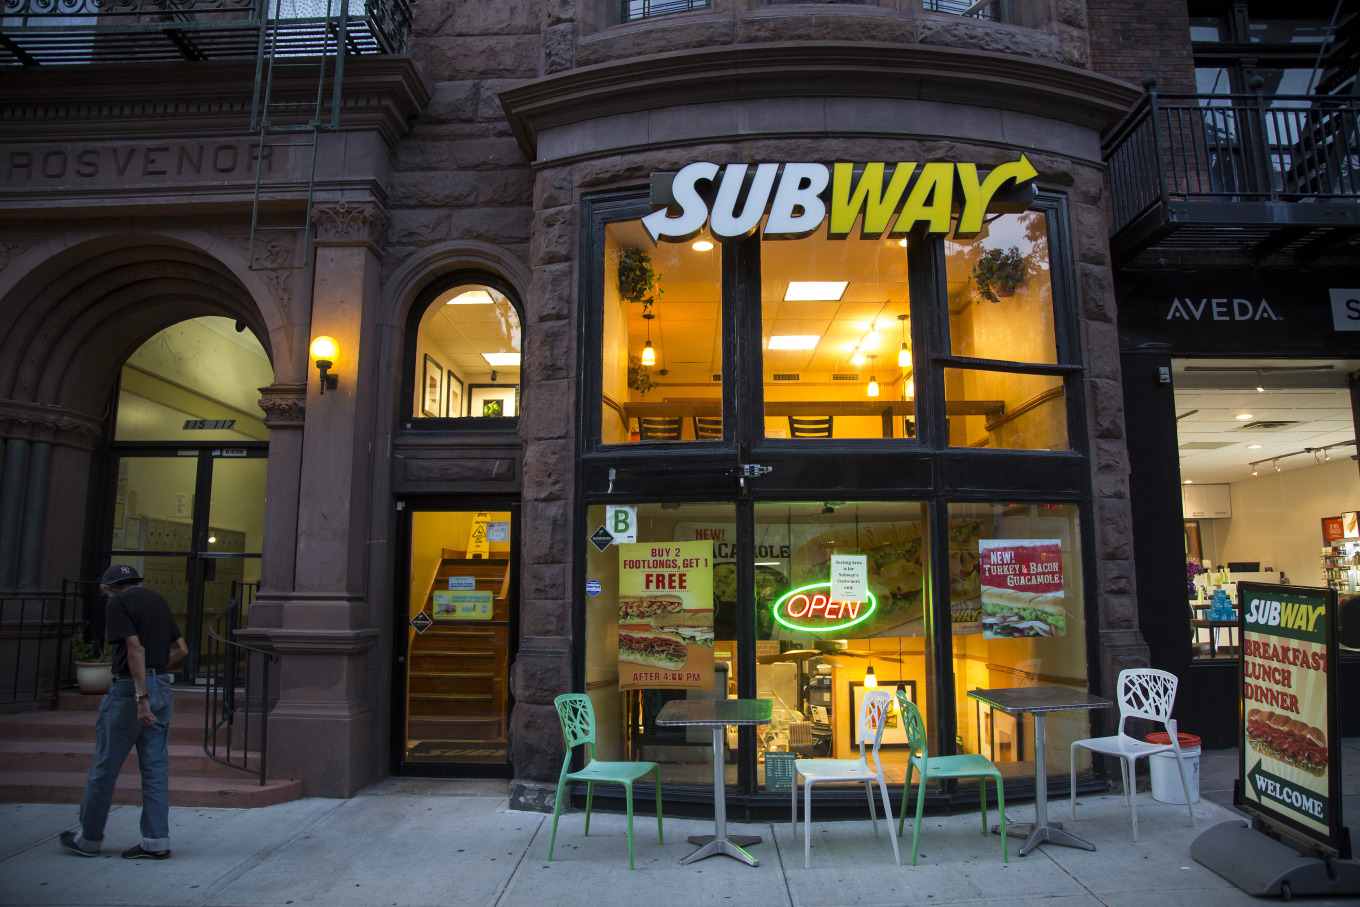 SUBWAY - Union Square - New York, NY  Food, Best fast food, Subway sandwich